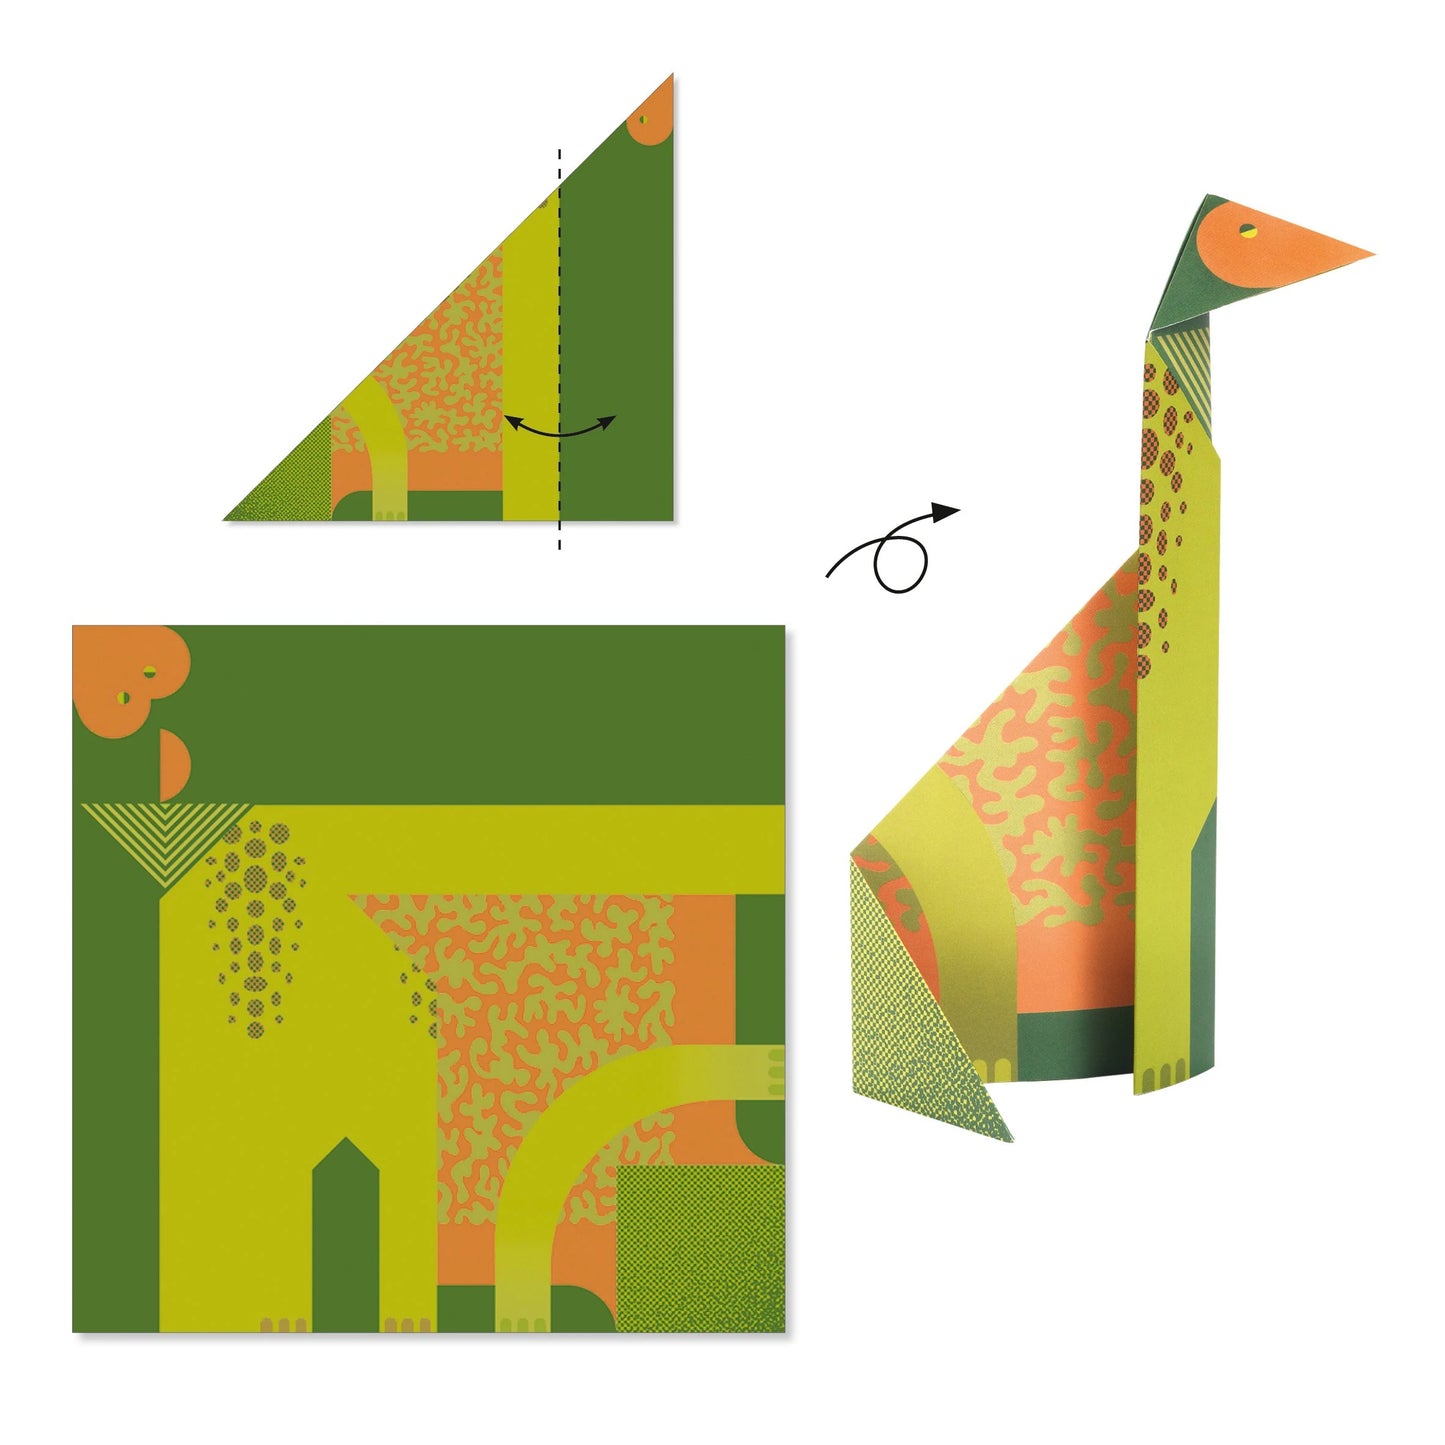 Dinosaur Origami Paper Craft Kit